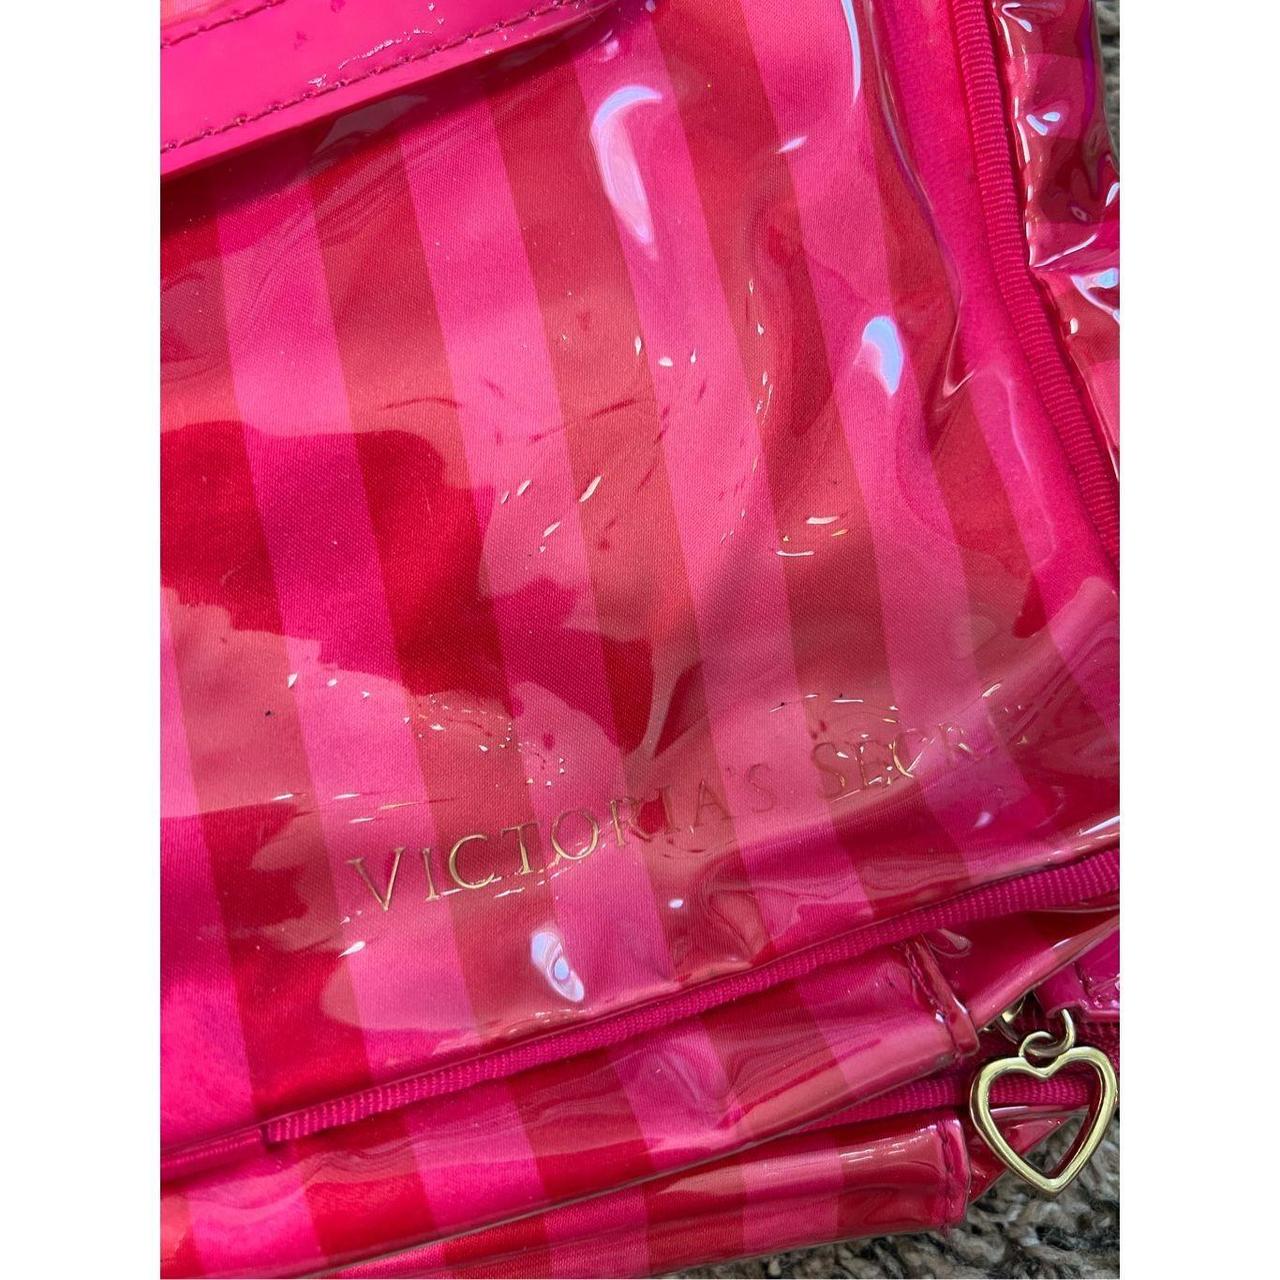 PINK Victoria's Secret, Bags, Victoria Secret Bling Bag